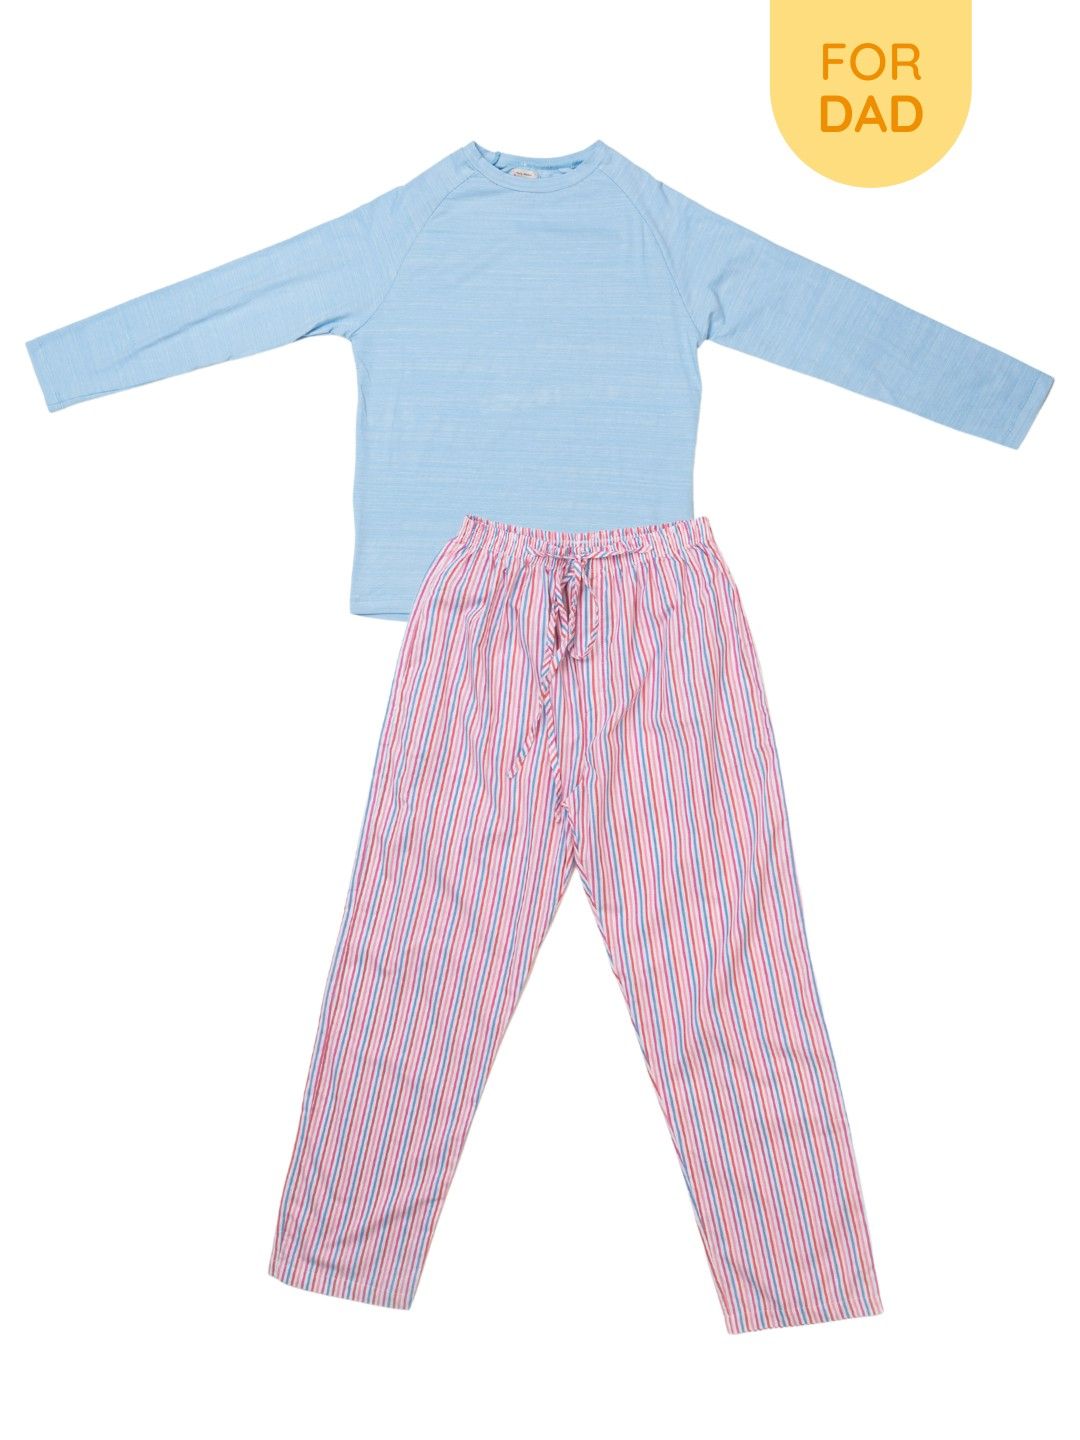 bean fashion Striped Sleep Pajama Set for Dad